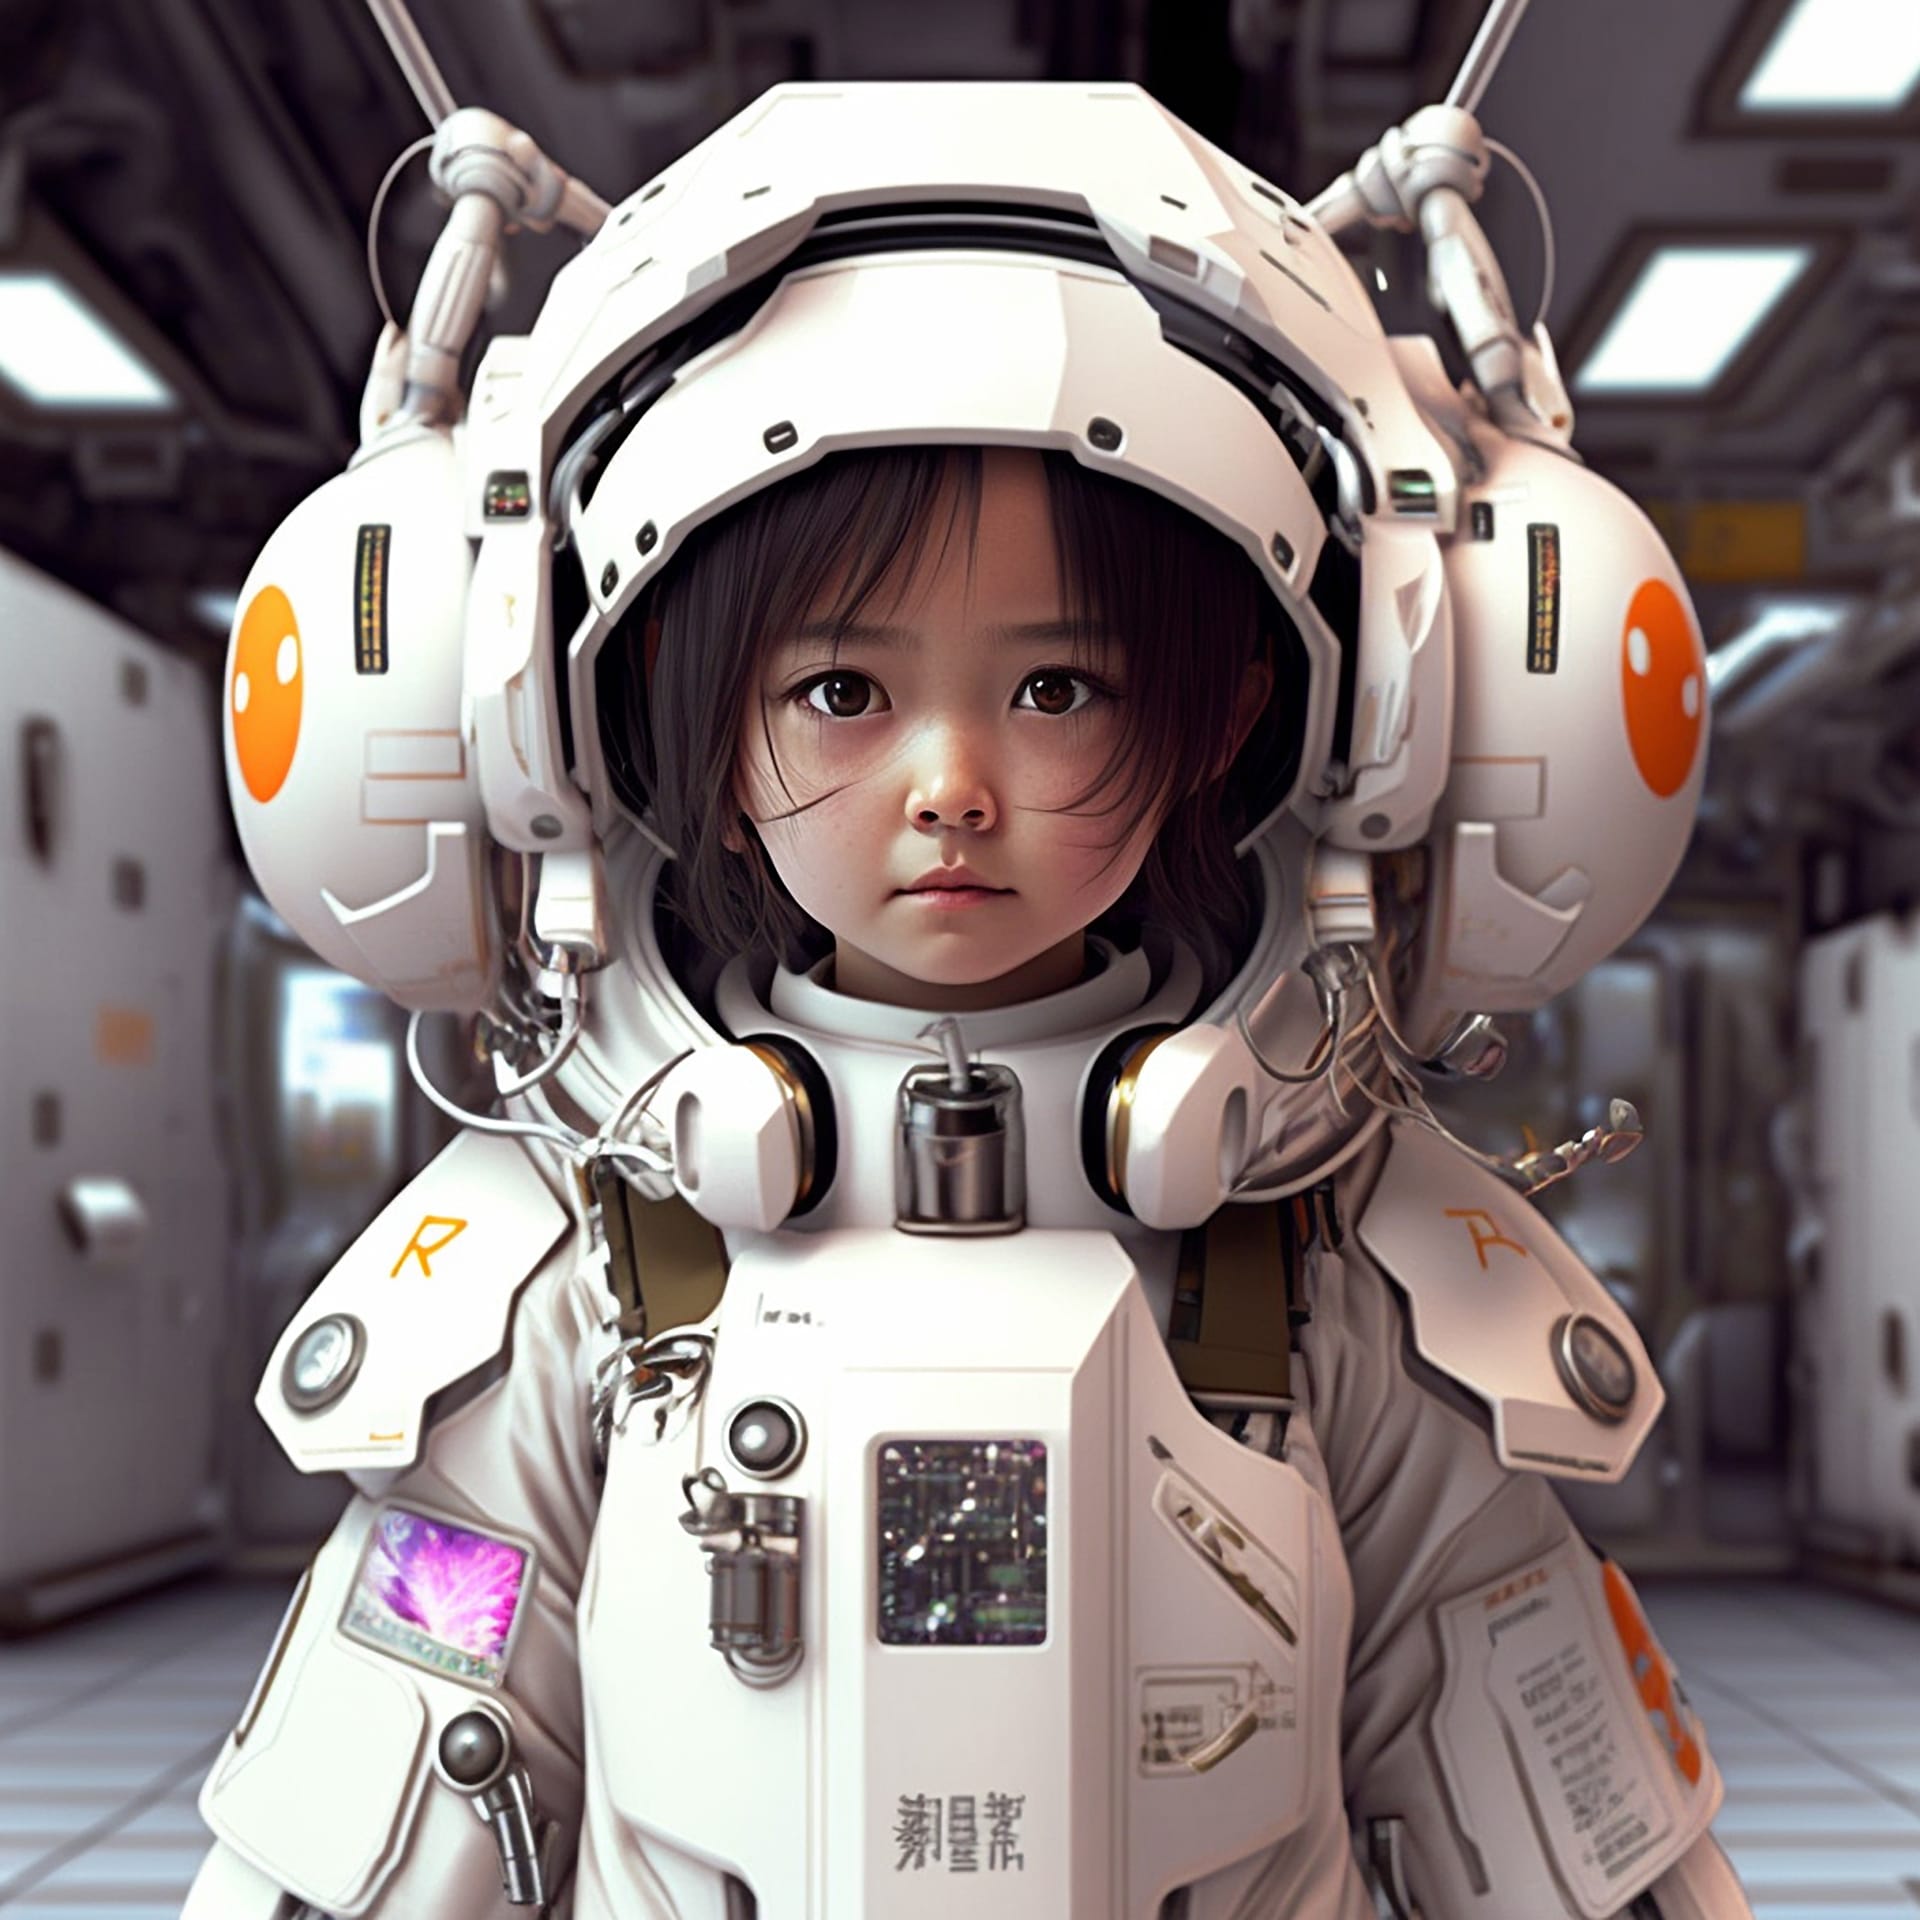 Tiny cute adorable artwork animal stuff people robot astronaut profile picture